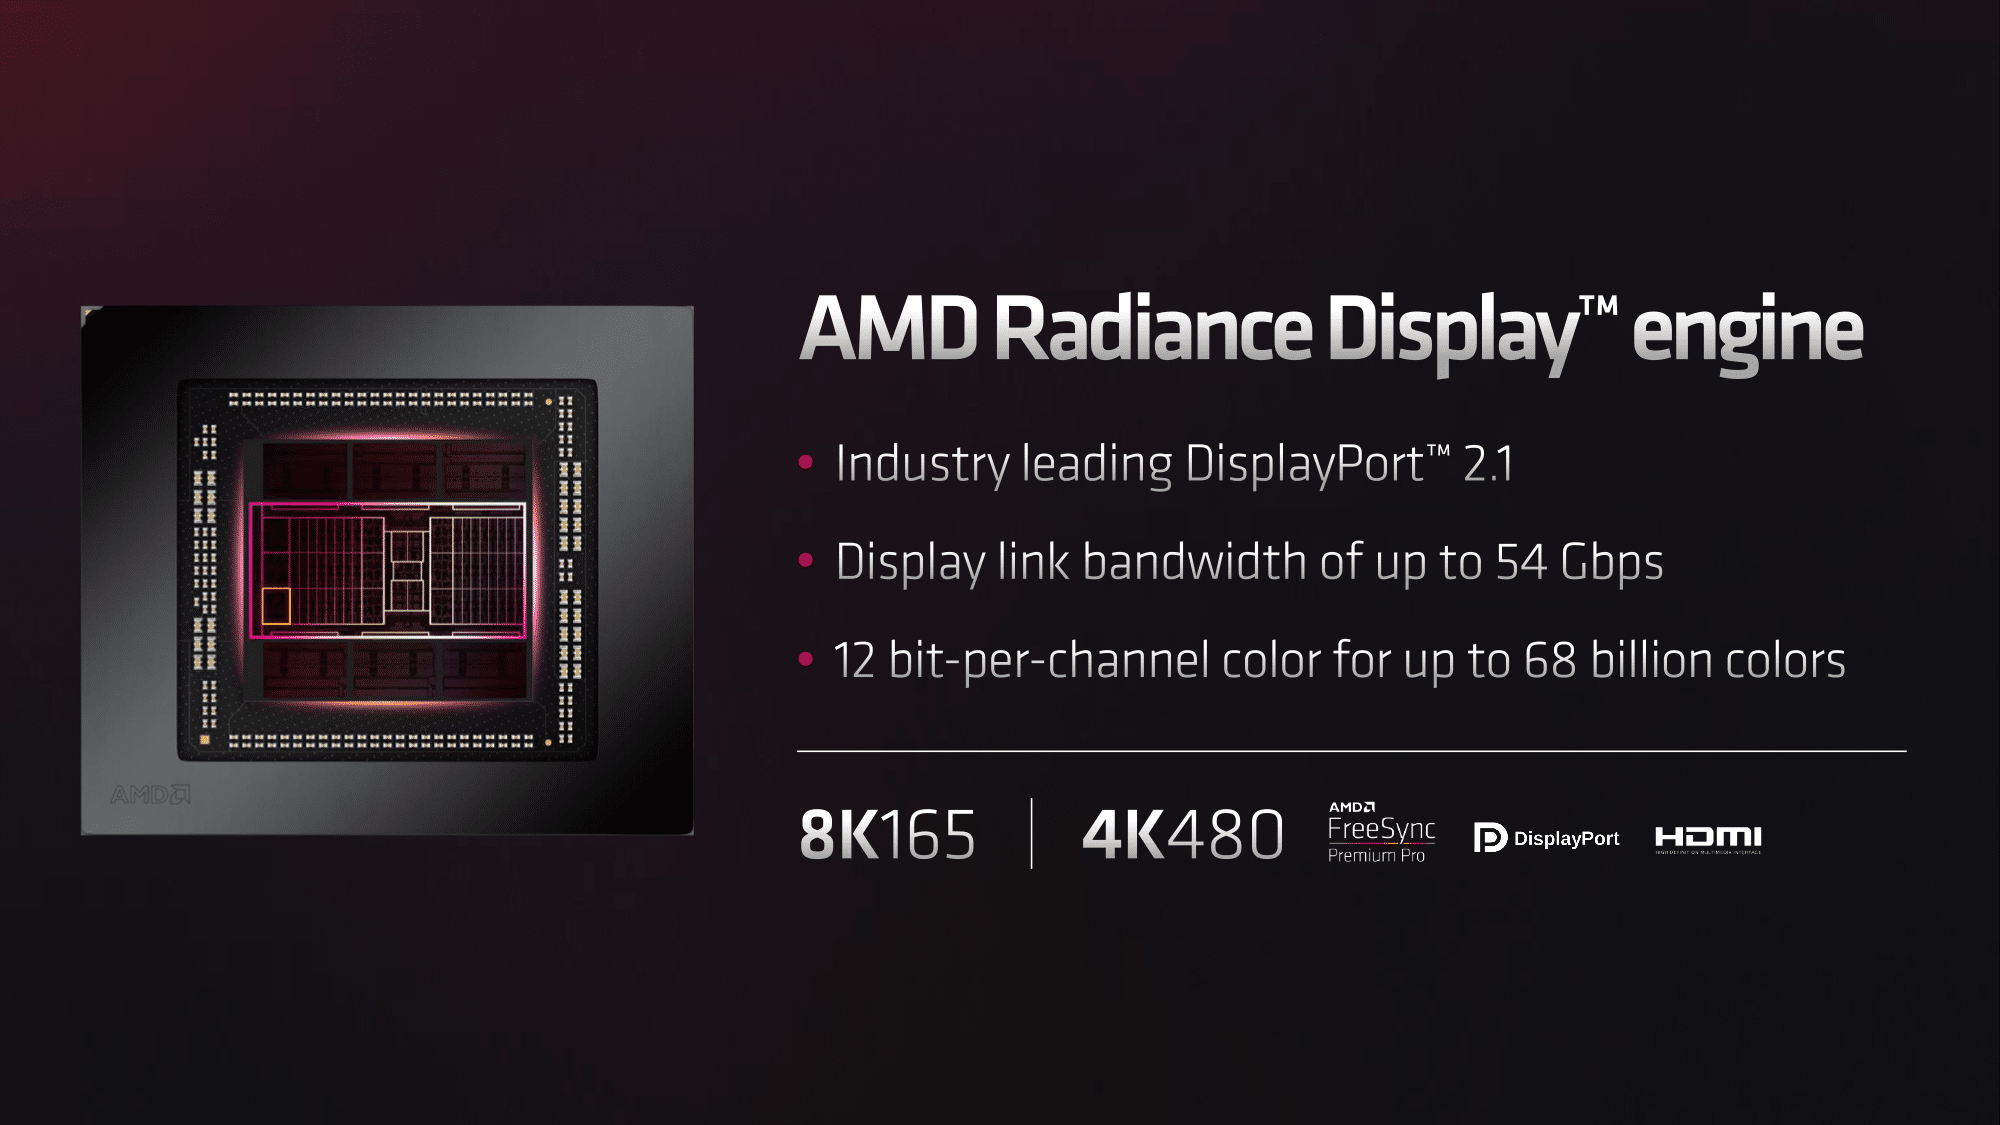 AMD Radeon RX 7900 XT Review - Keeping Graphics Cards Sensible 38